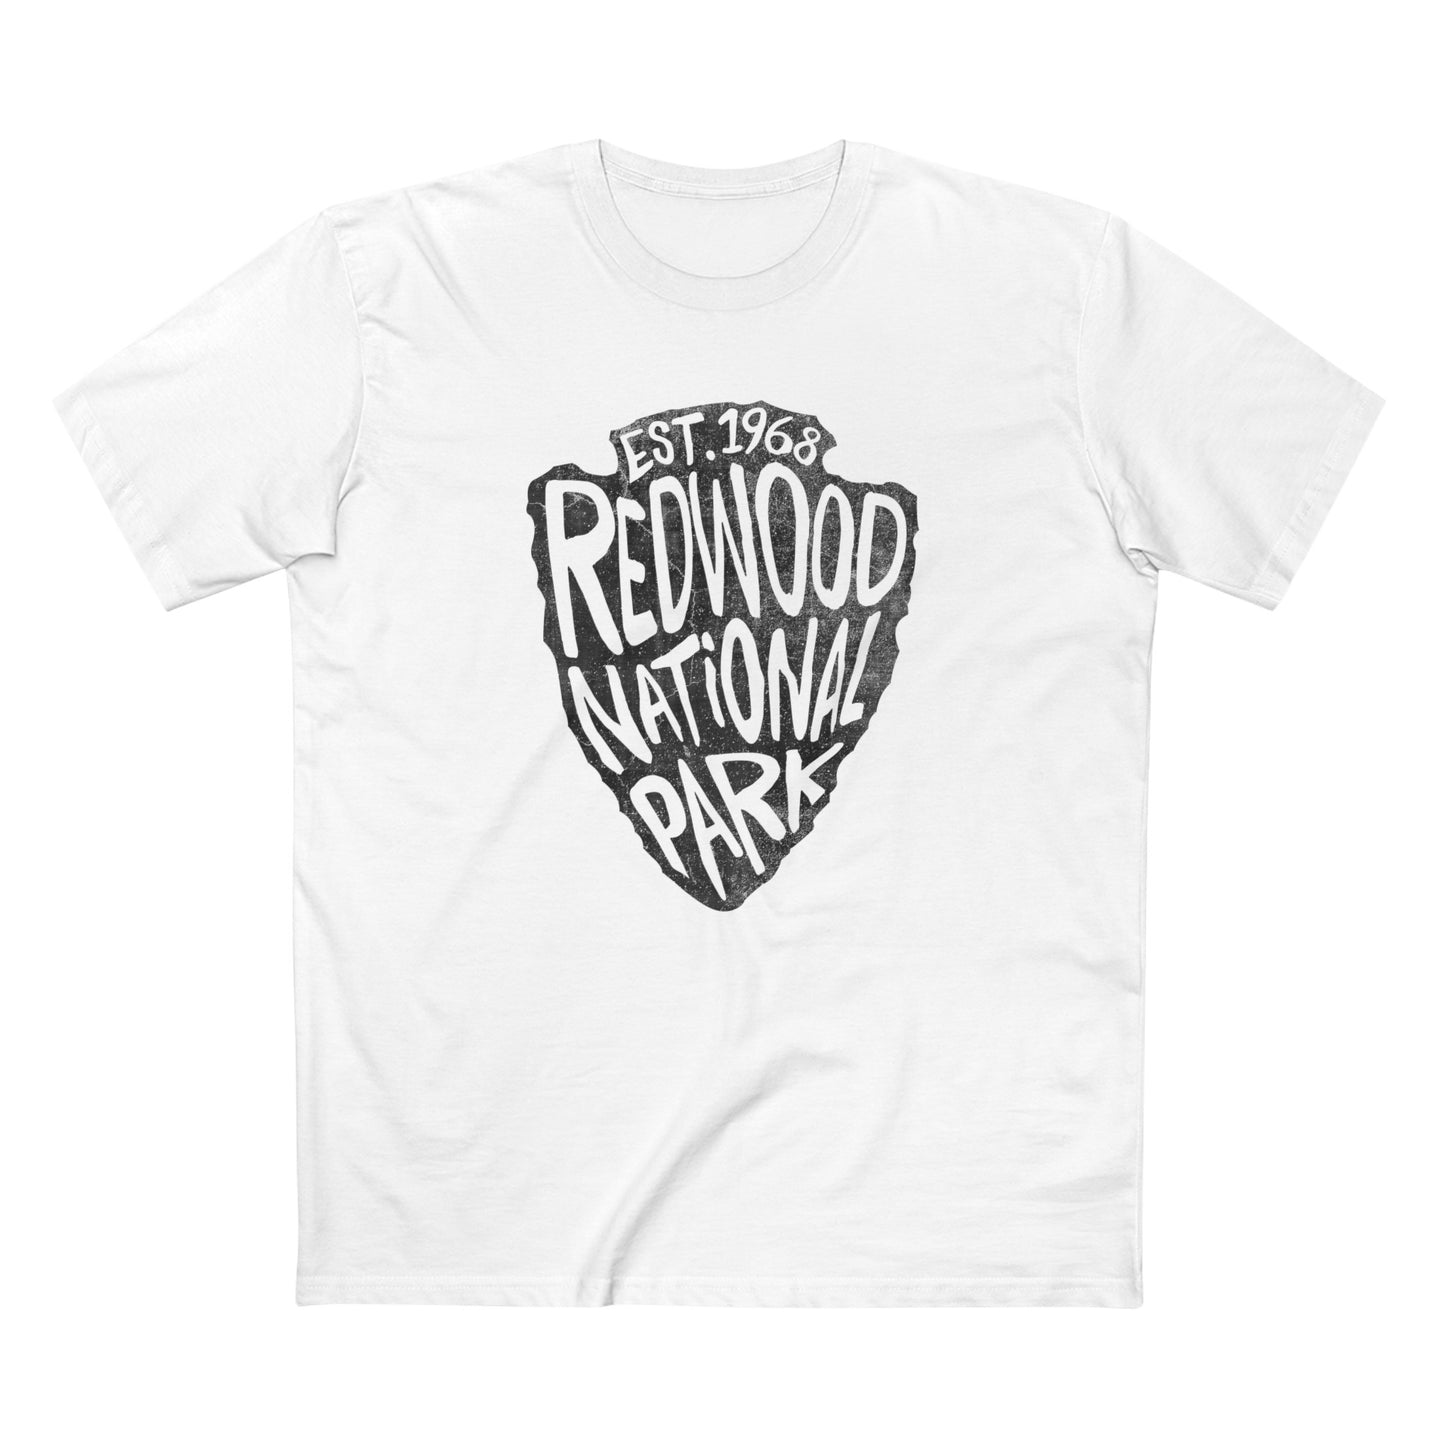 Redwood National Park T-Shirt - Arrow head Design